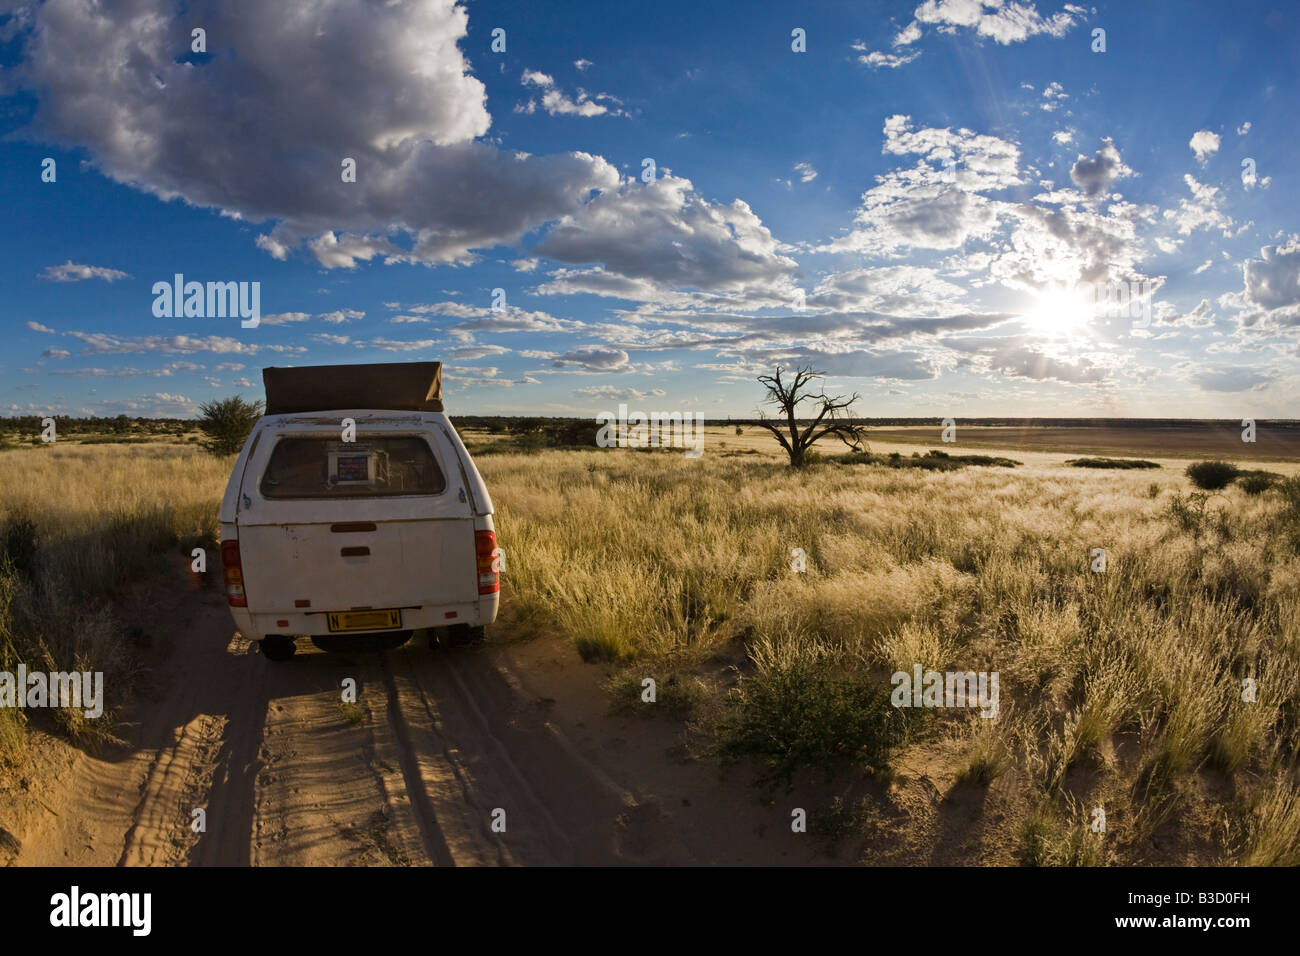 Africa, Botswana, veicolo sulla via Foto Stock